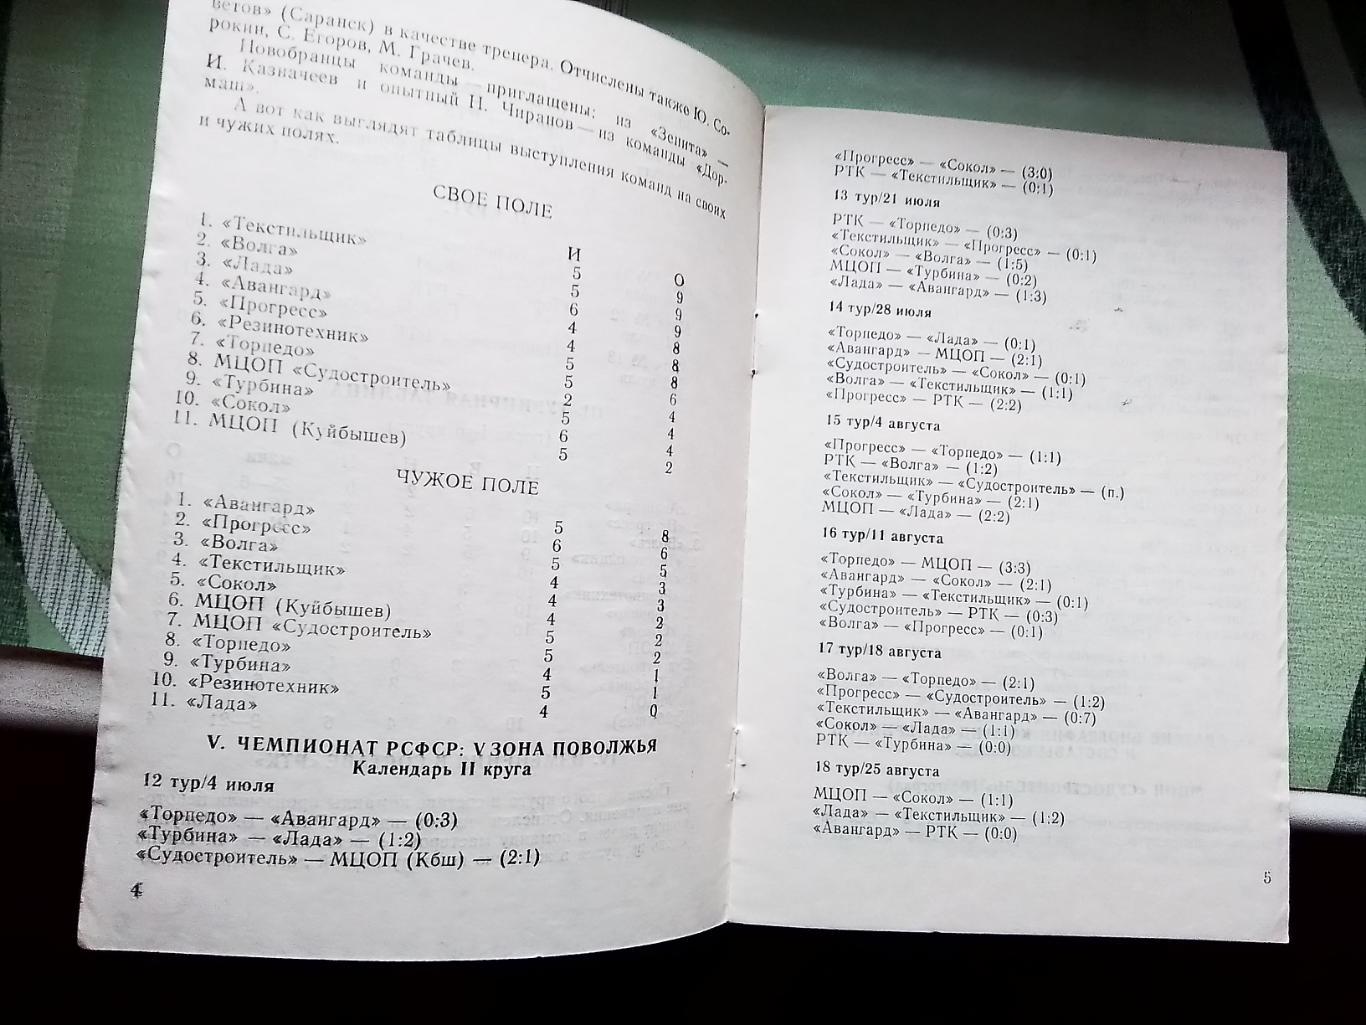 Программа сезона календарь Резинотехник Саранск 1990 1 круг 3